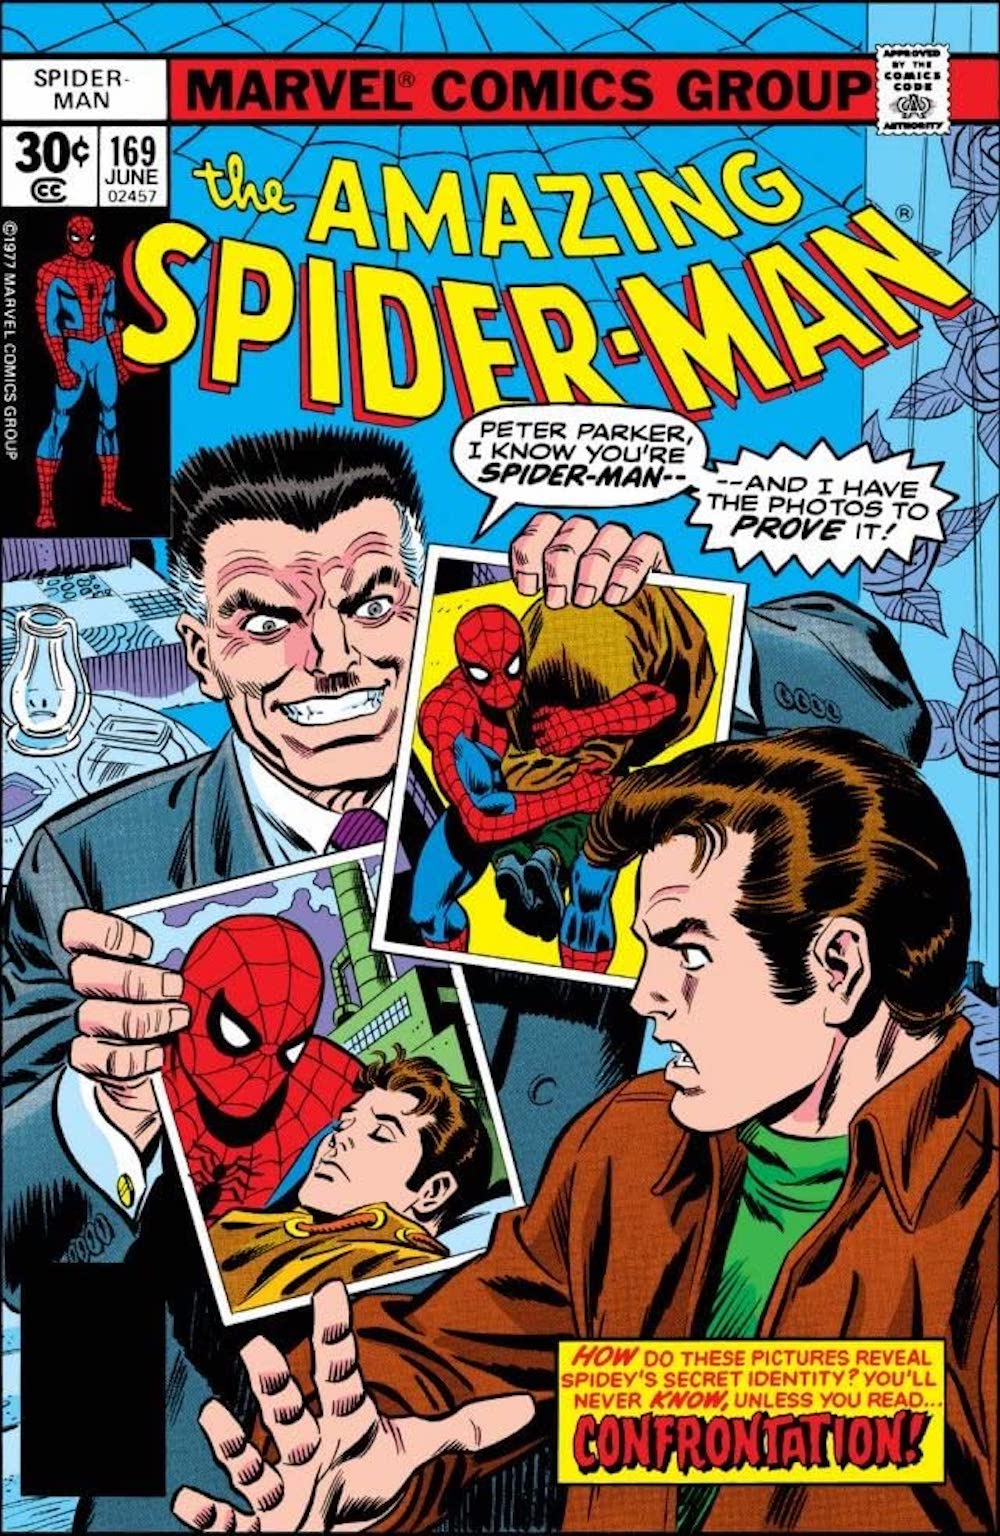 Spider-Man - Spider-Man and his Amazing Friends cartoon - Profile 